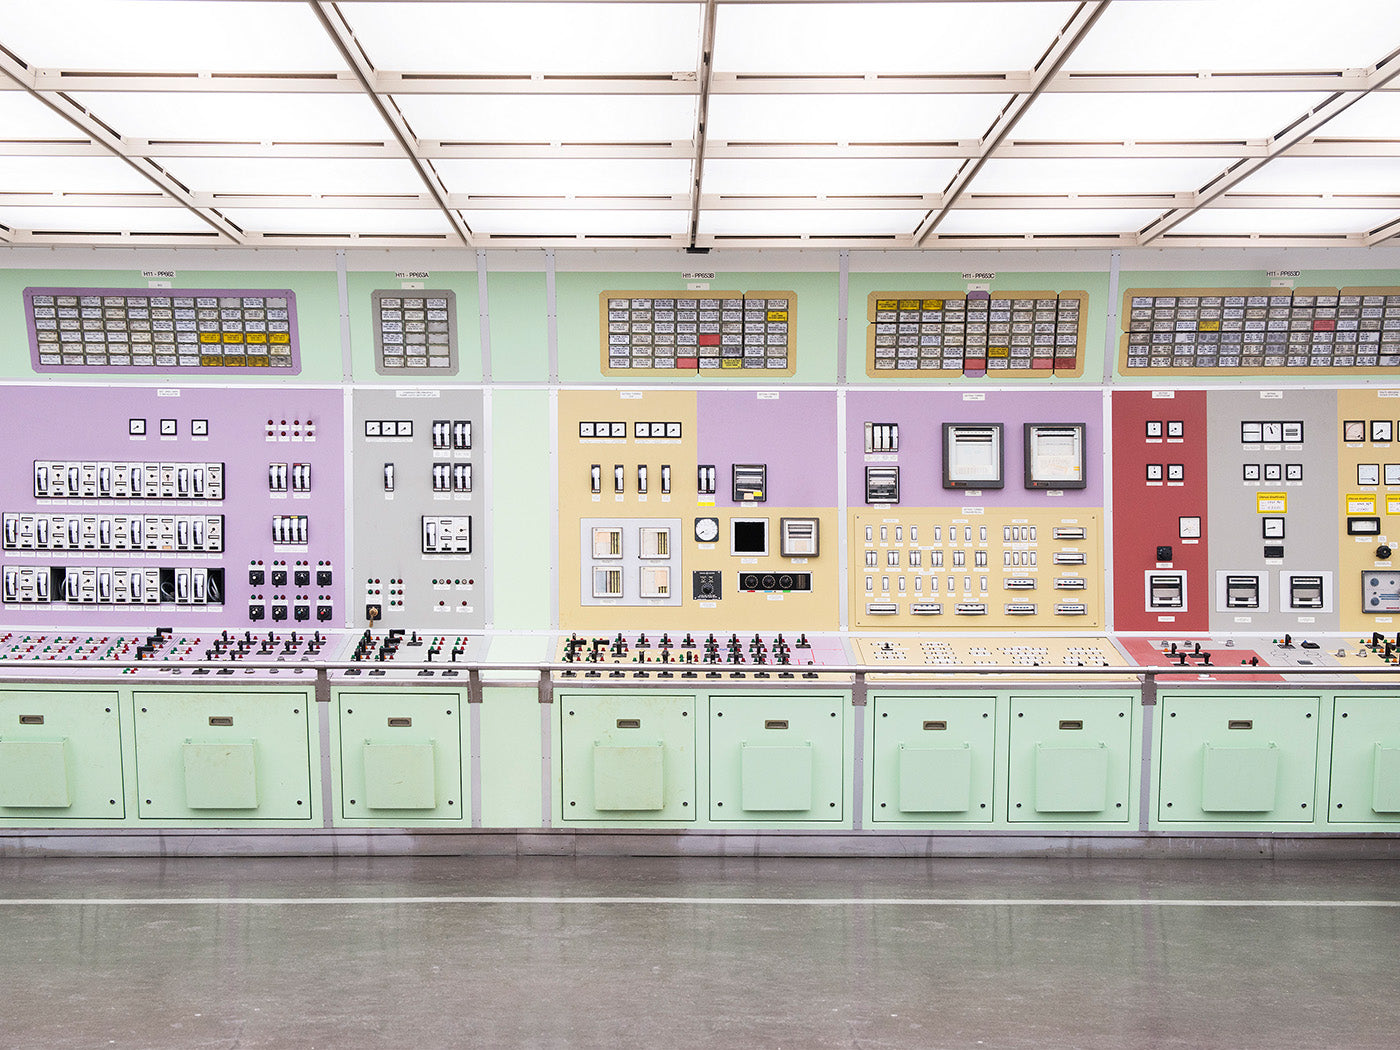 Image of the control desk at Caorso nuclear power plant, Piacenza by Mattia Balsamini